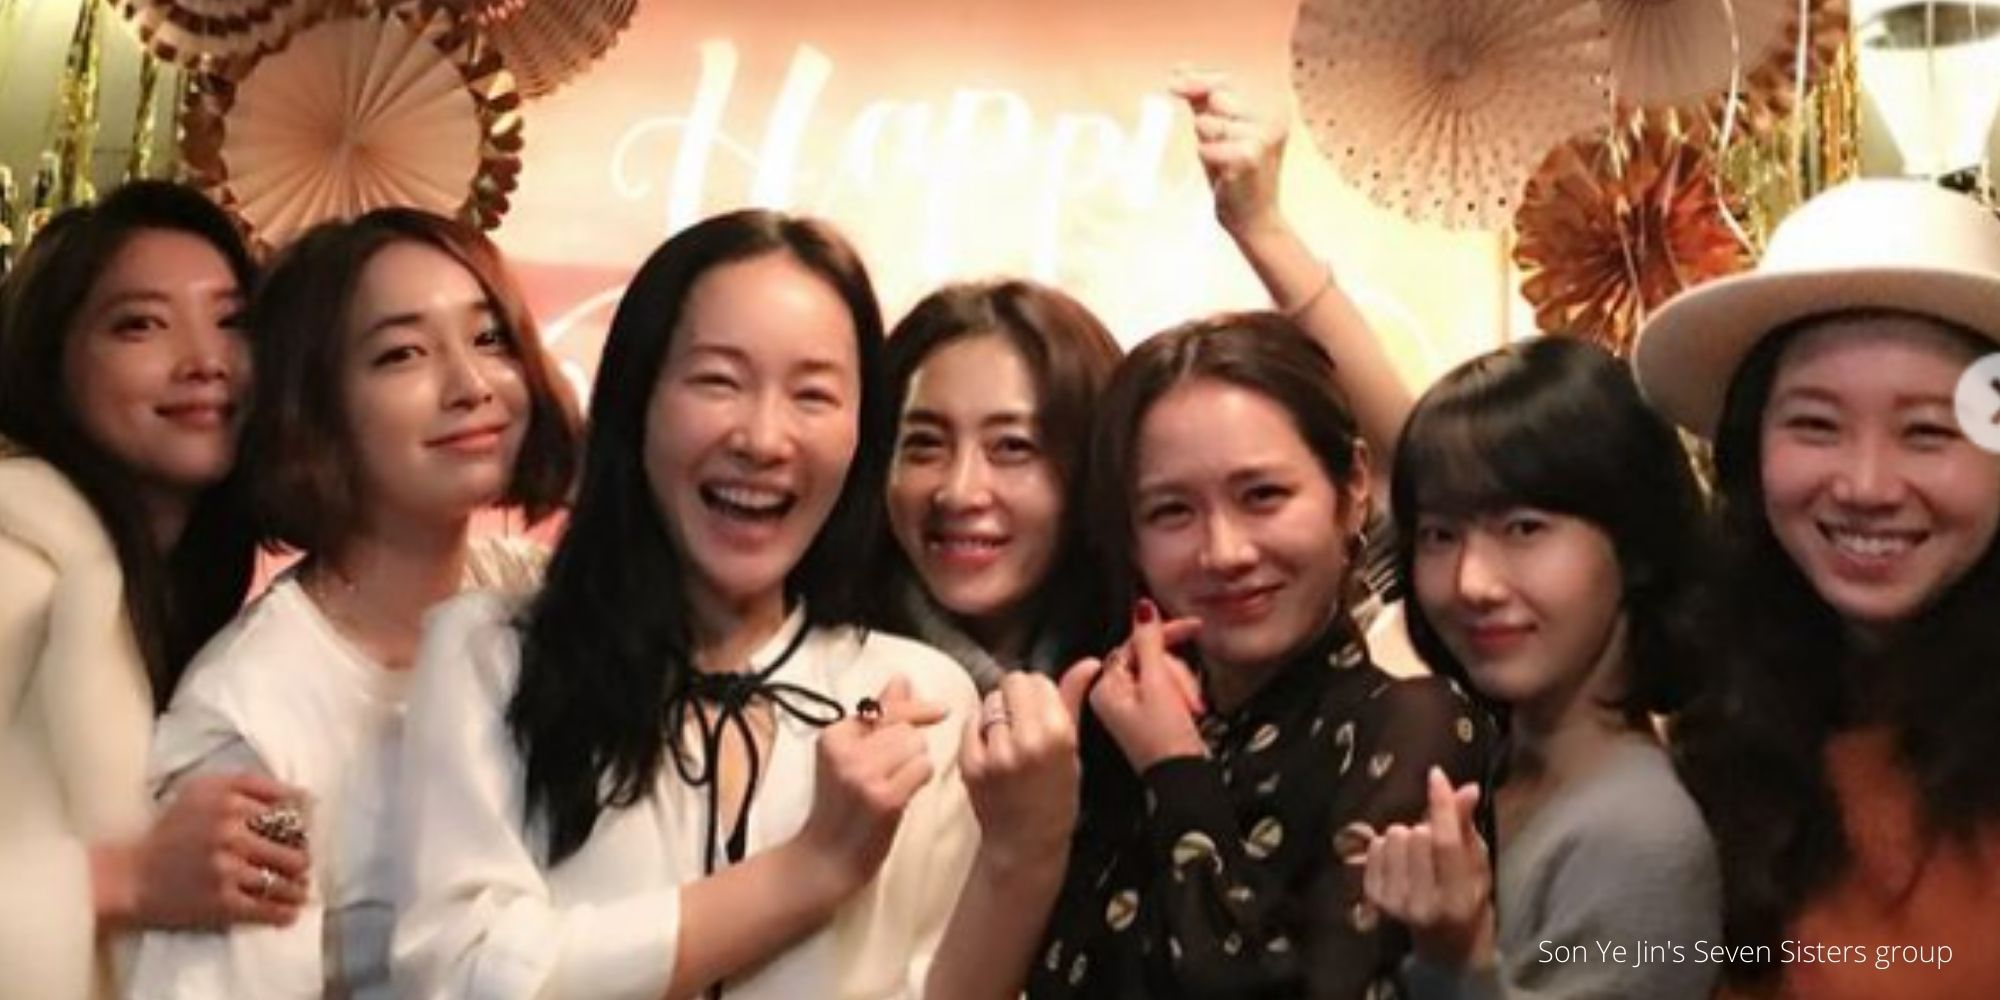 Son Ye Jin's Seven Sisters group